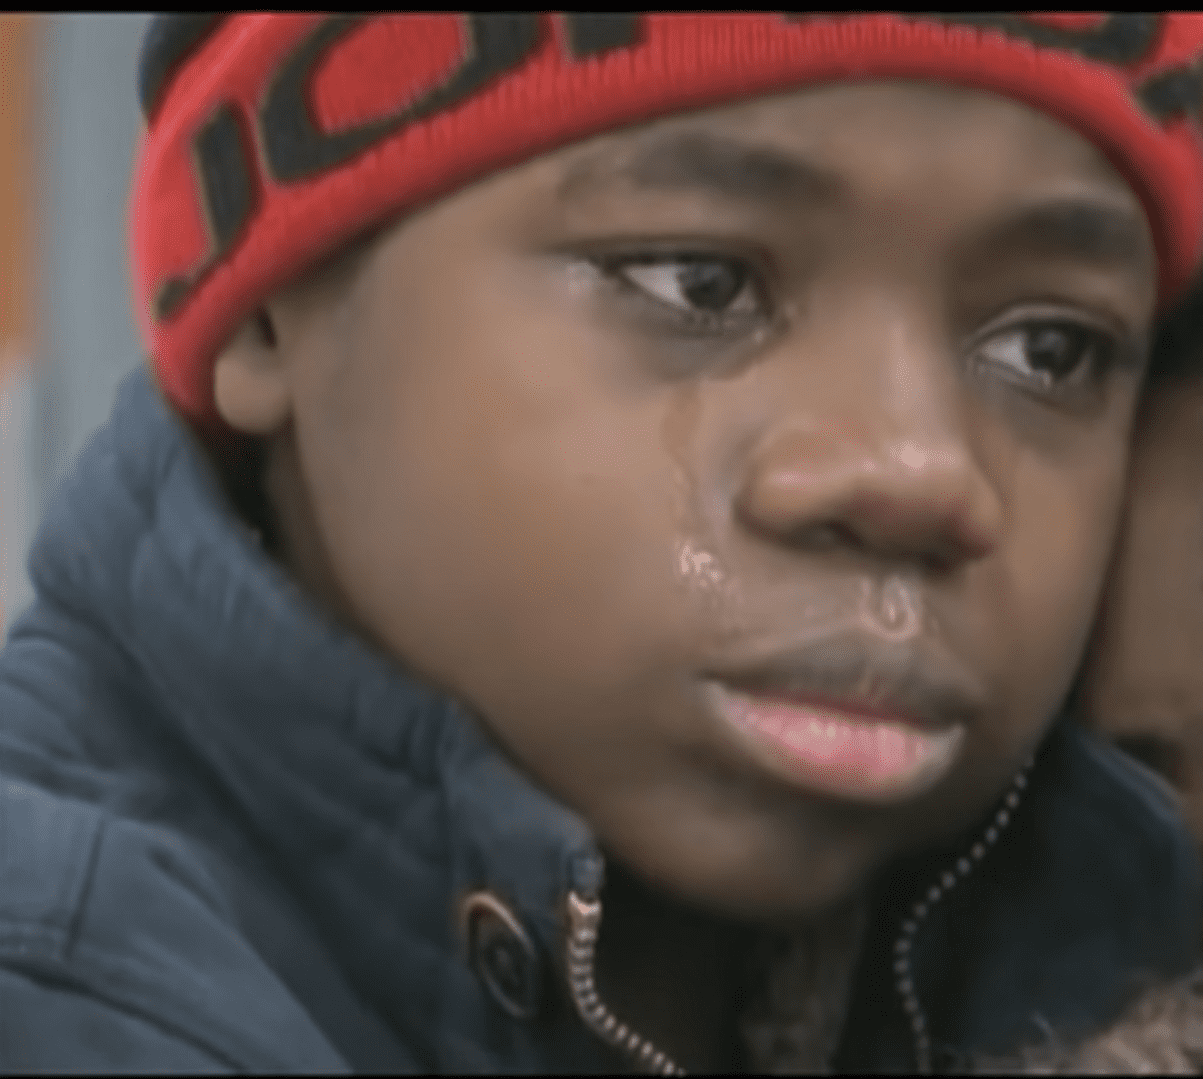 The teen boy crying. | Source: youtube.com/CBS Evening News